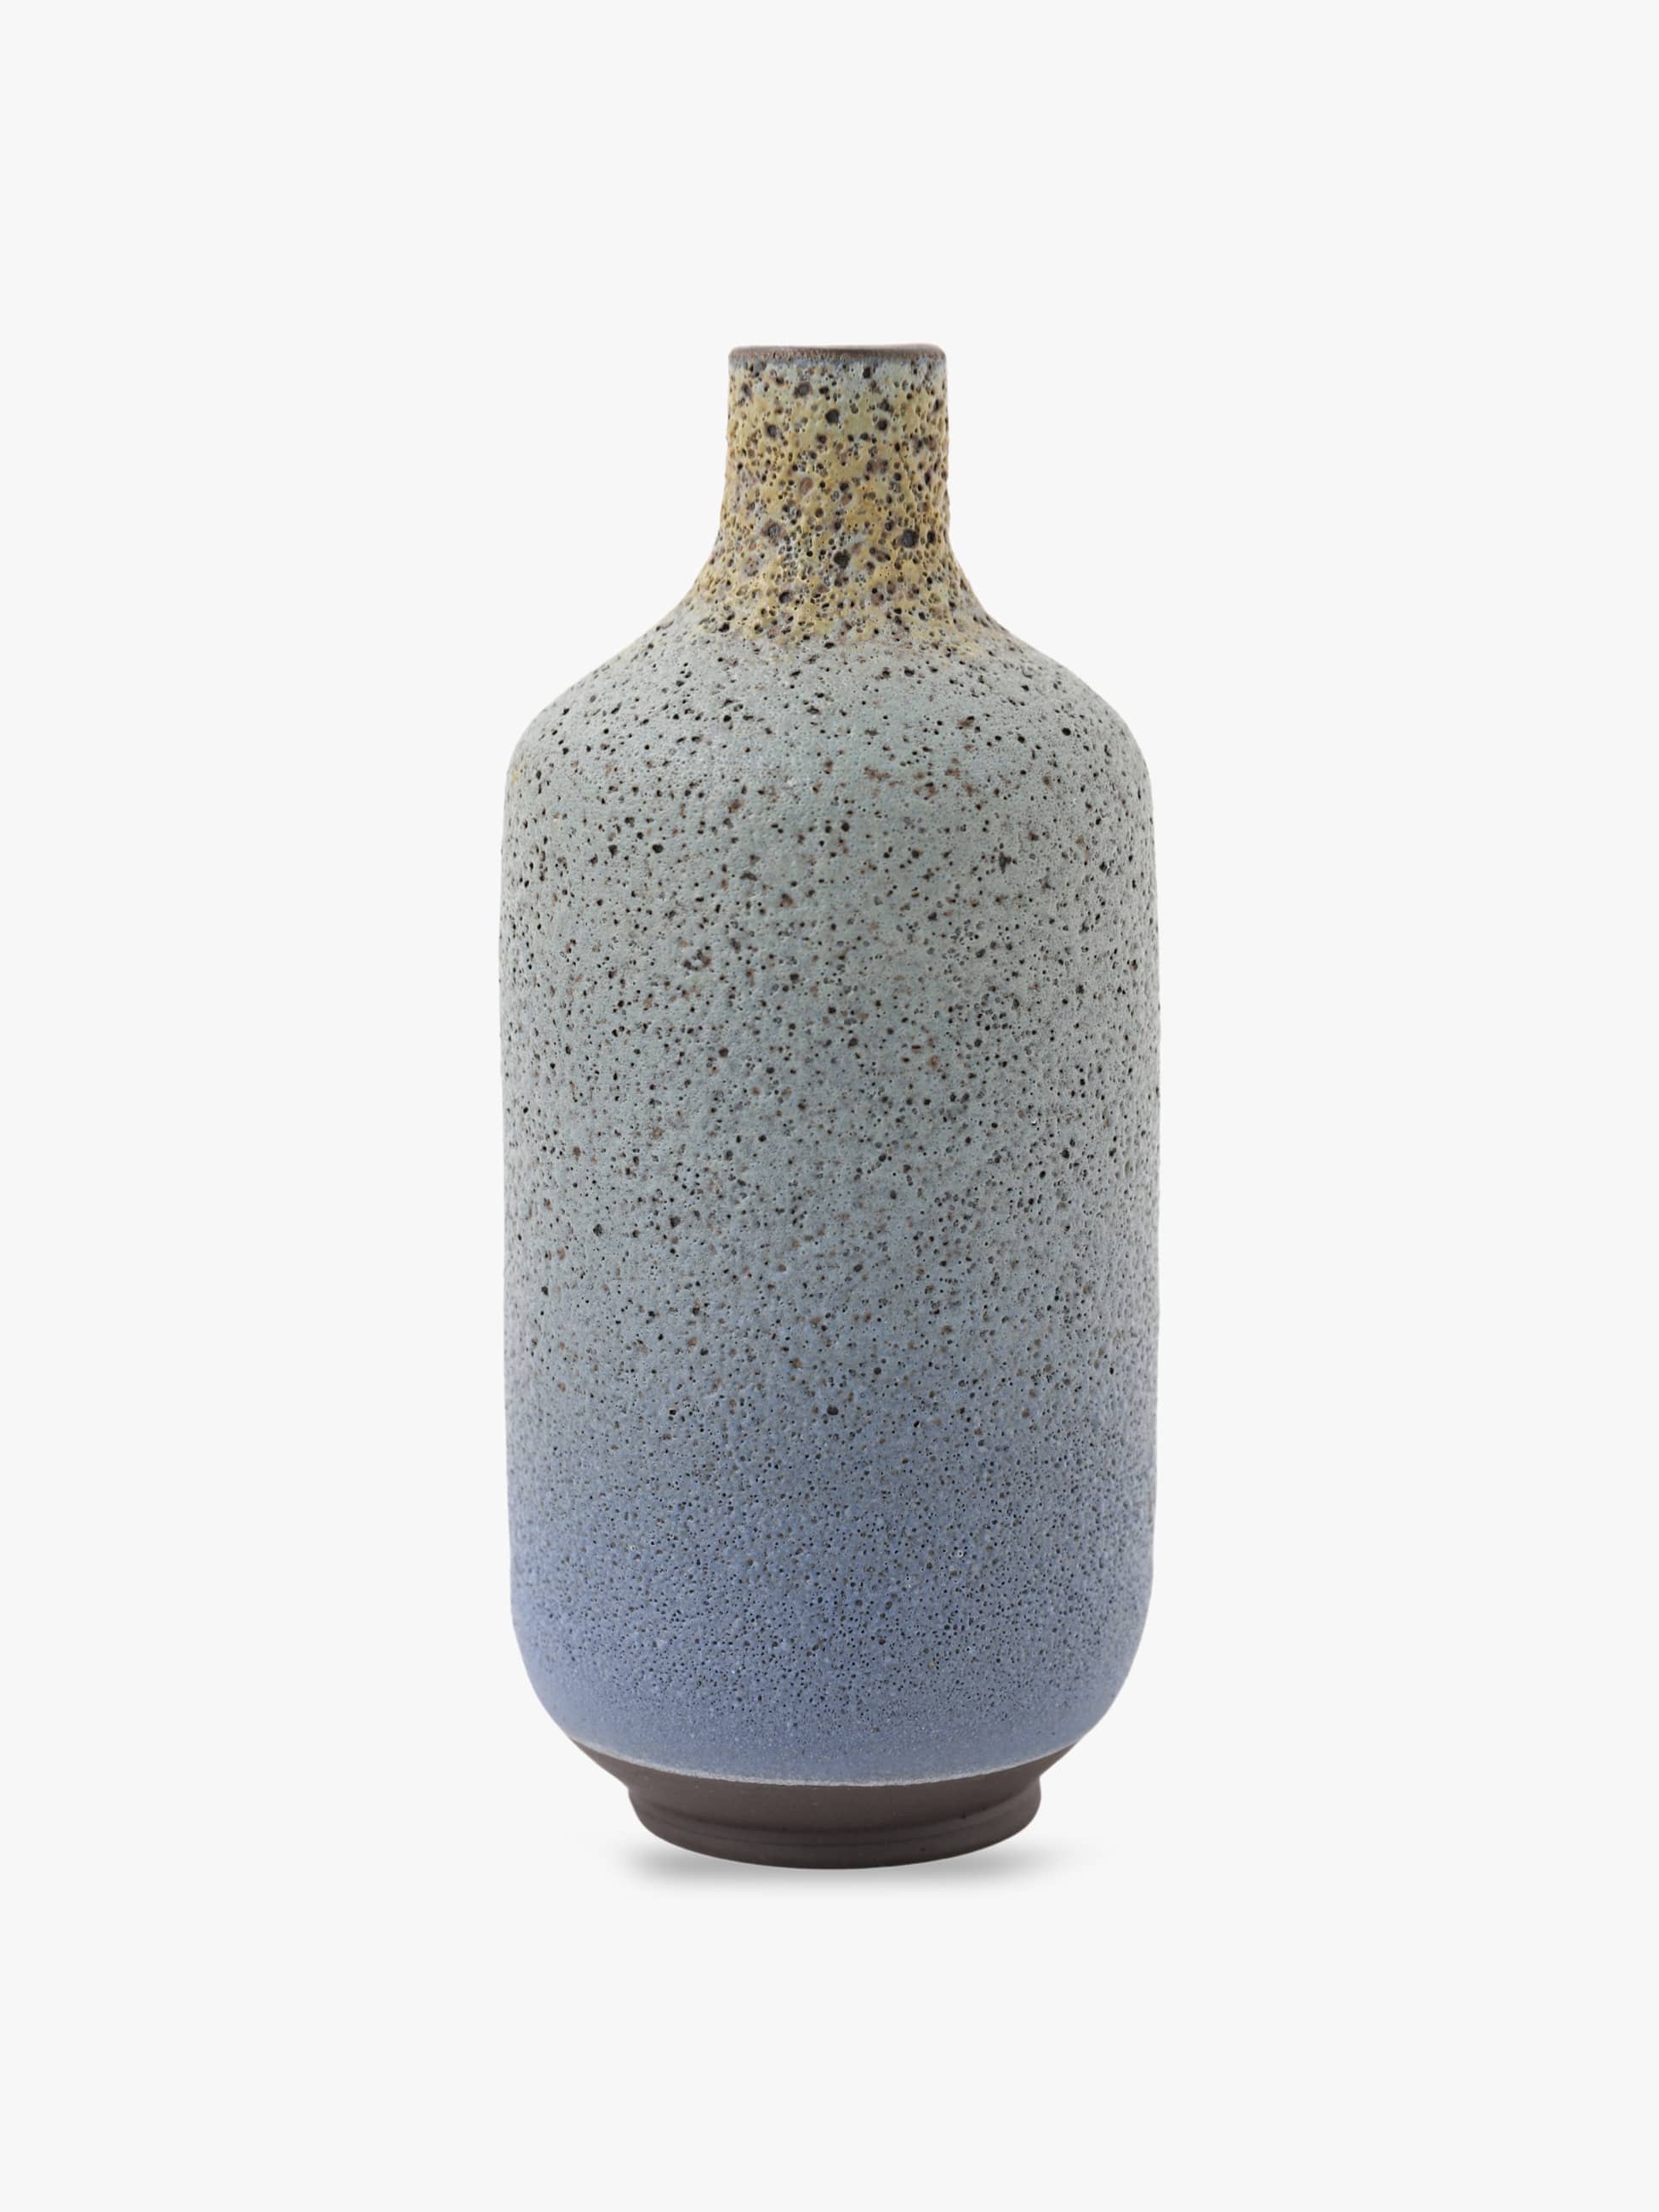 Ceramic Vase #1 詳細画像 other 1